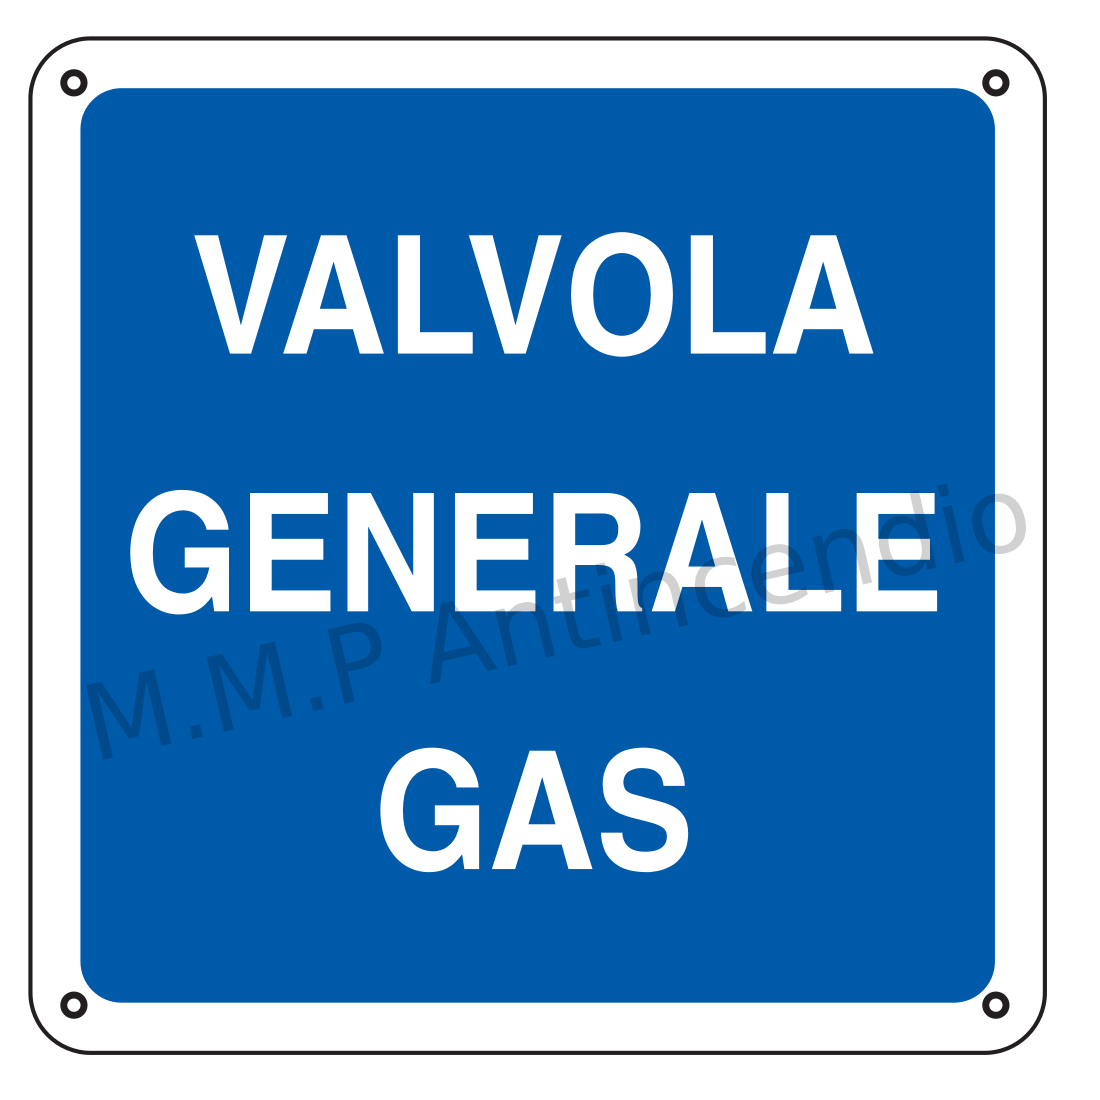 Valvola generale gas